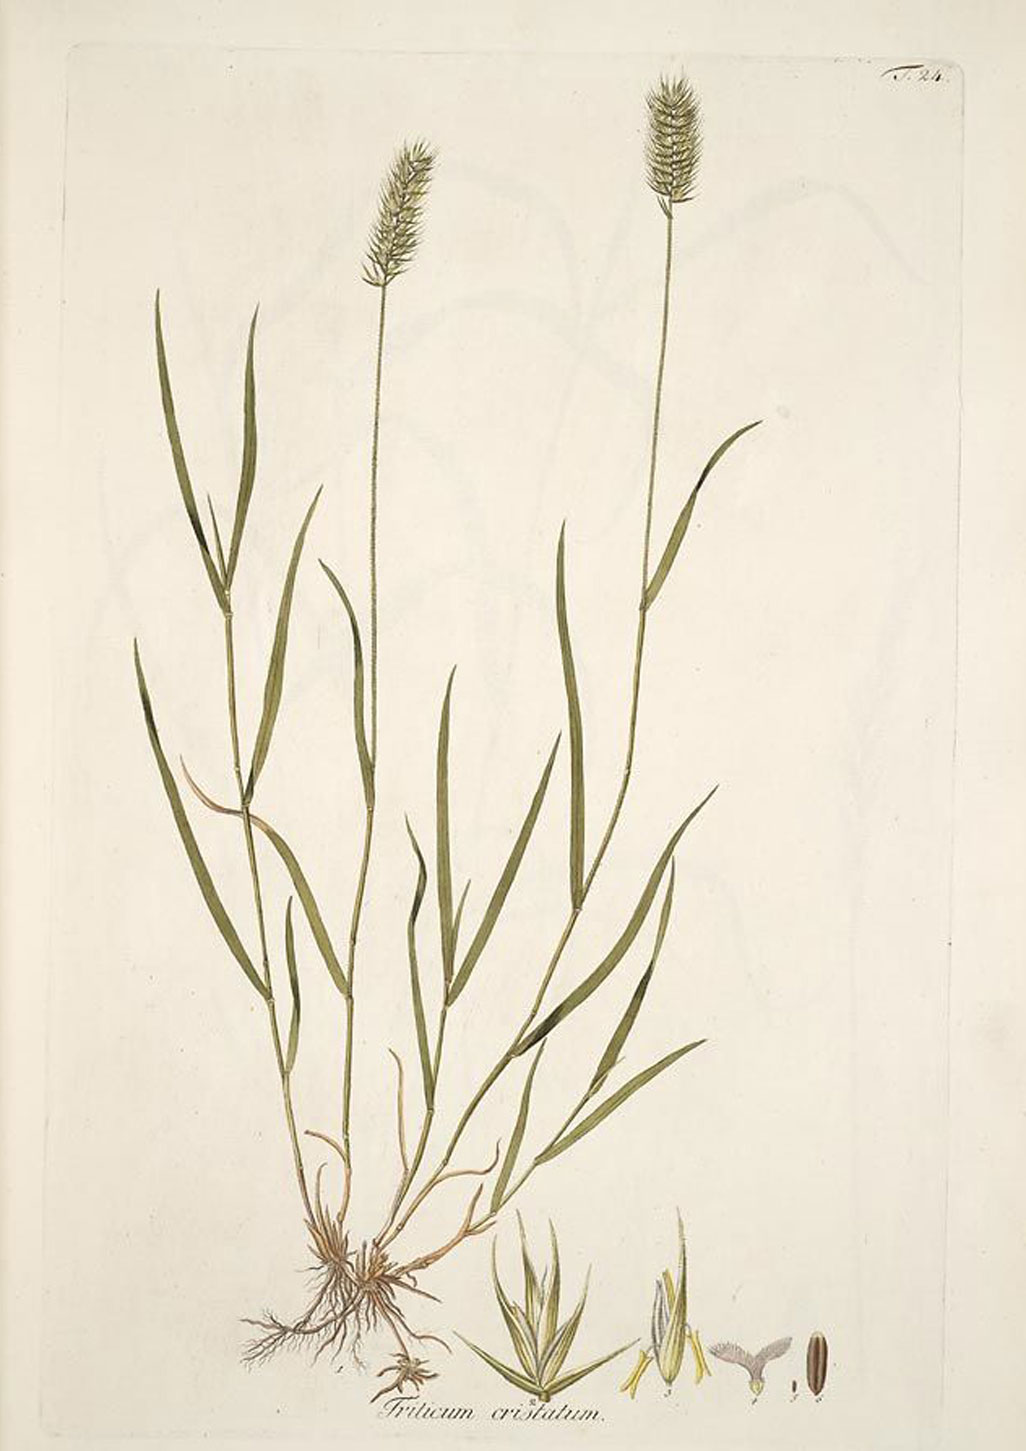 Plant-Illustration-of-Crested-wheatgrass